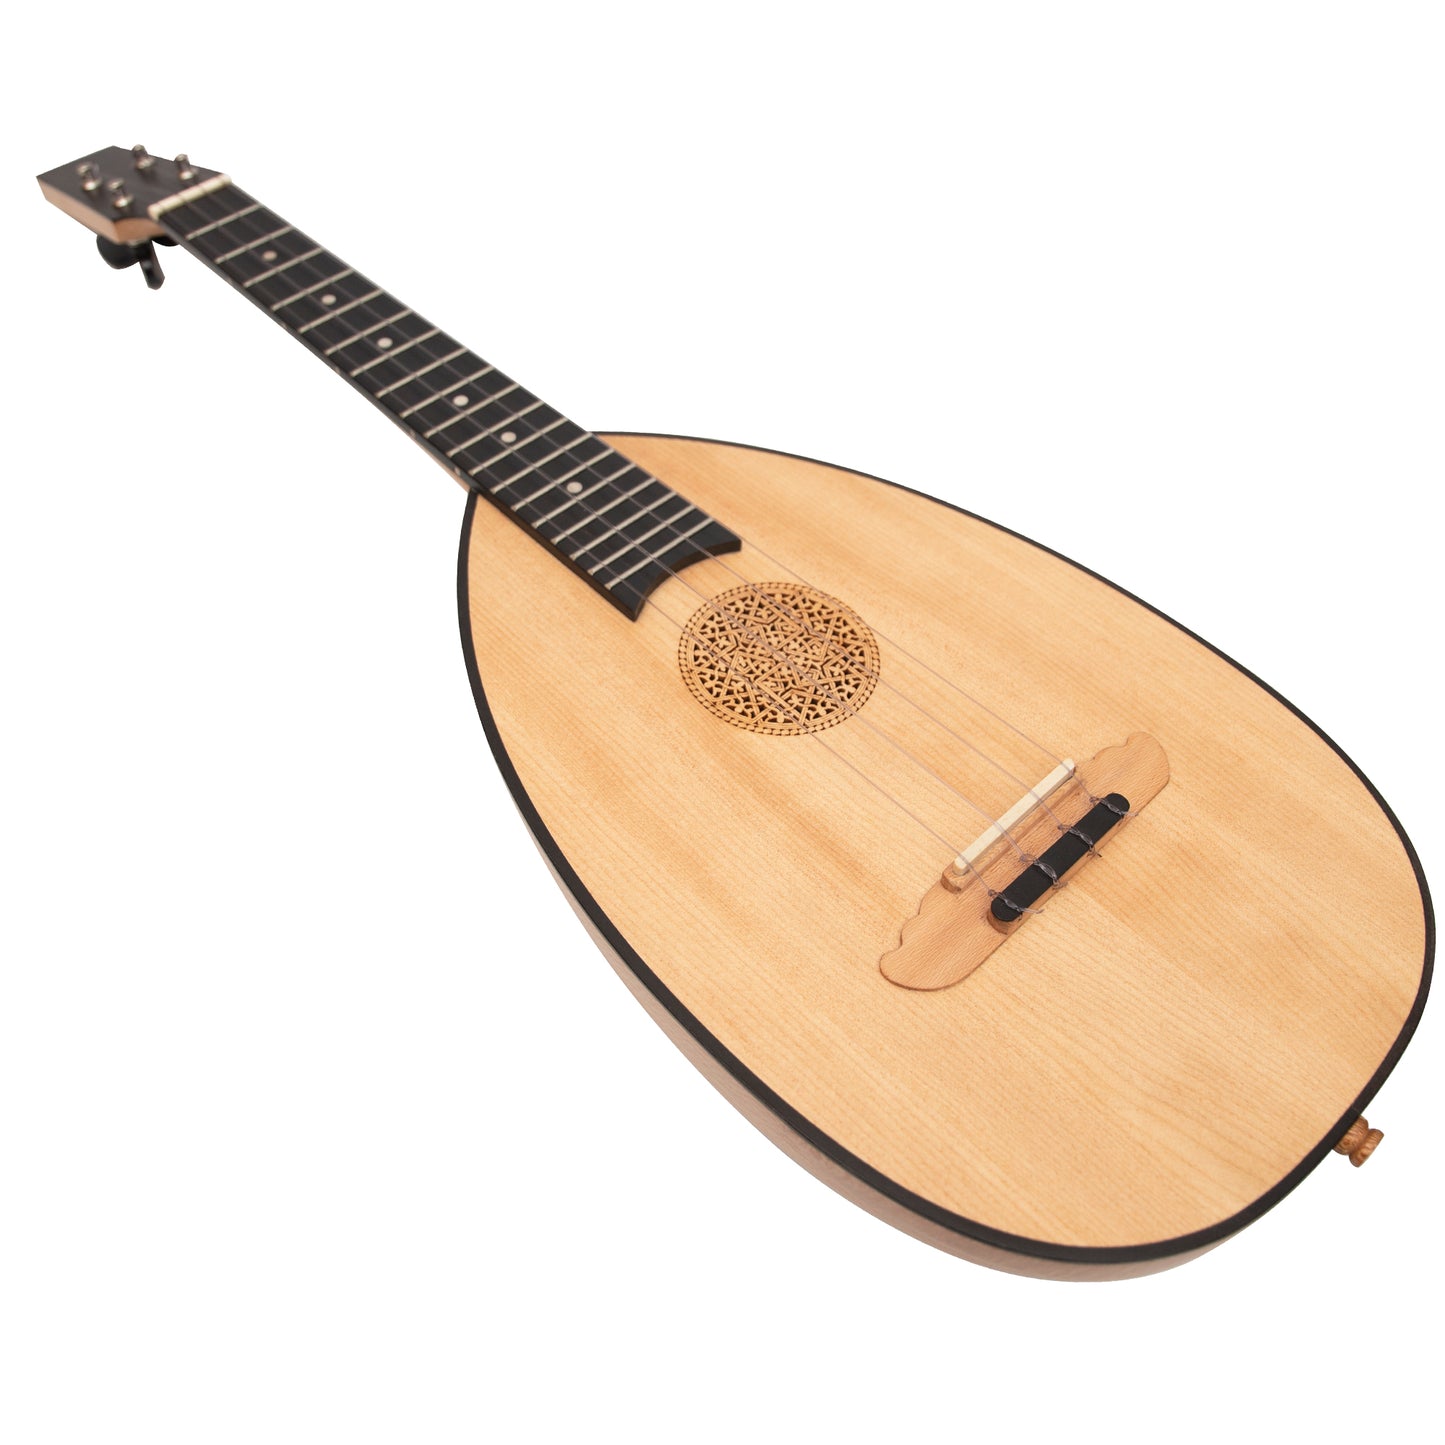 Heartland Baroque Ukulele, 4 String Tenor Variegated Walnut and Lacewood